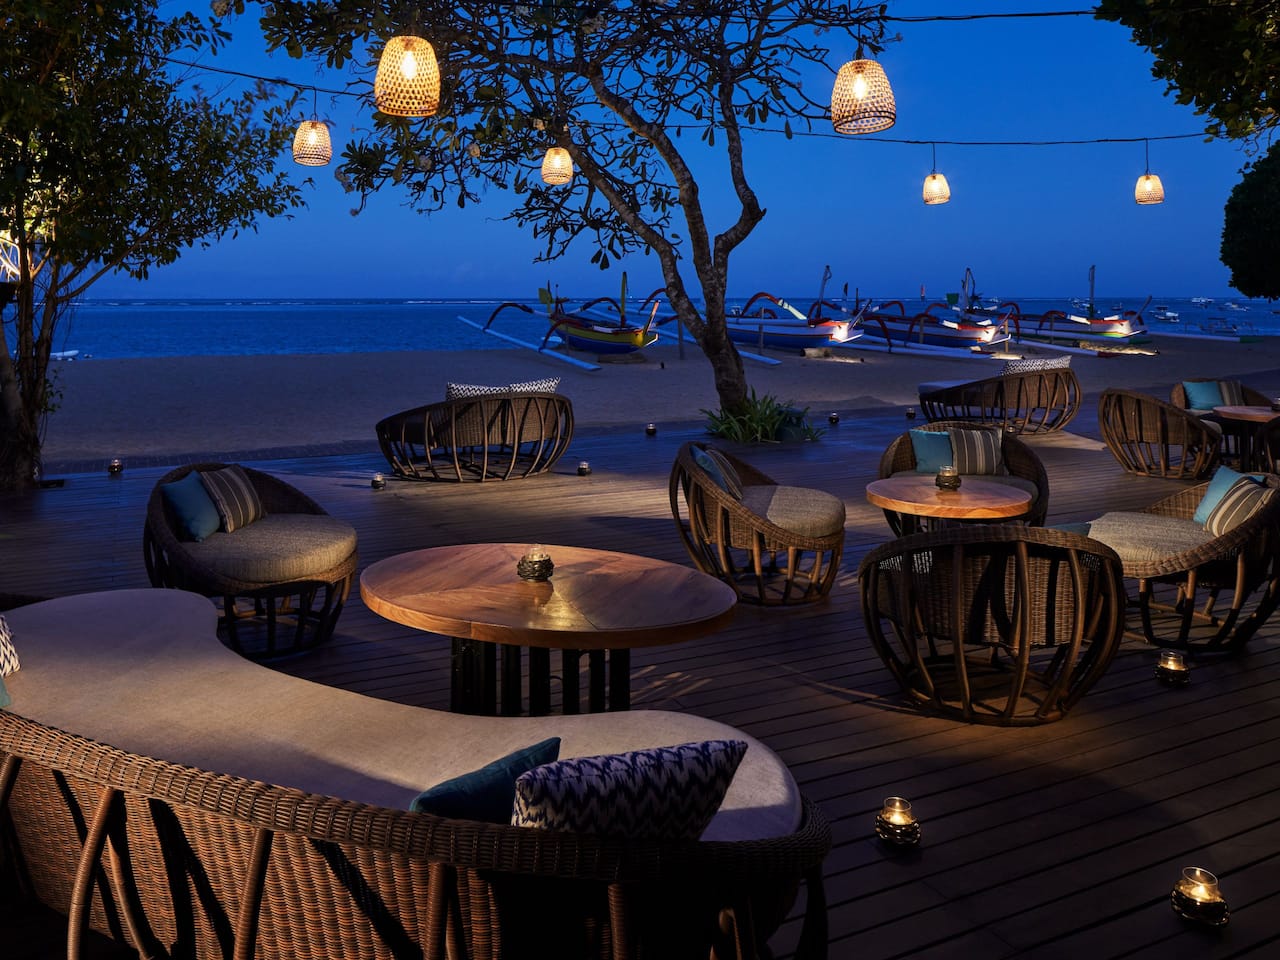 Pizzaria Italian Beachfront Restaurant and Bar The Hyatt Regency Bali, Sanur Bali